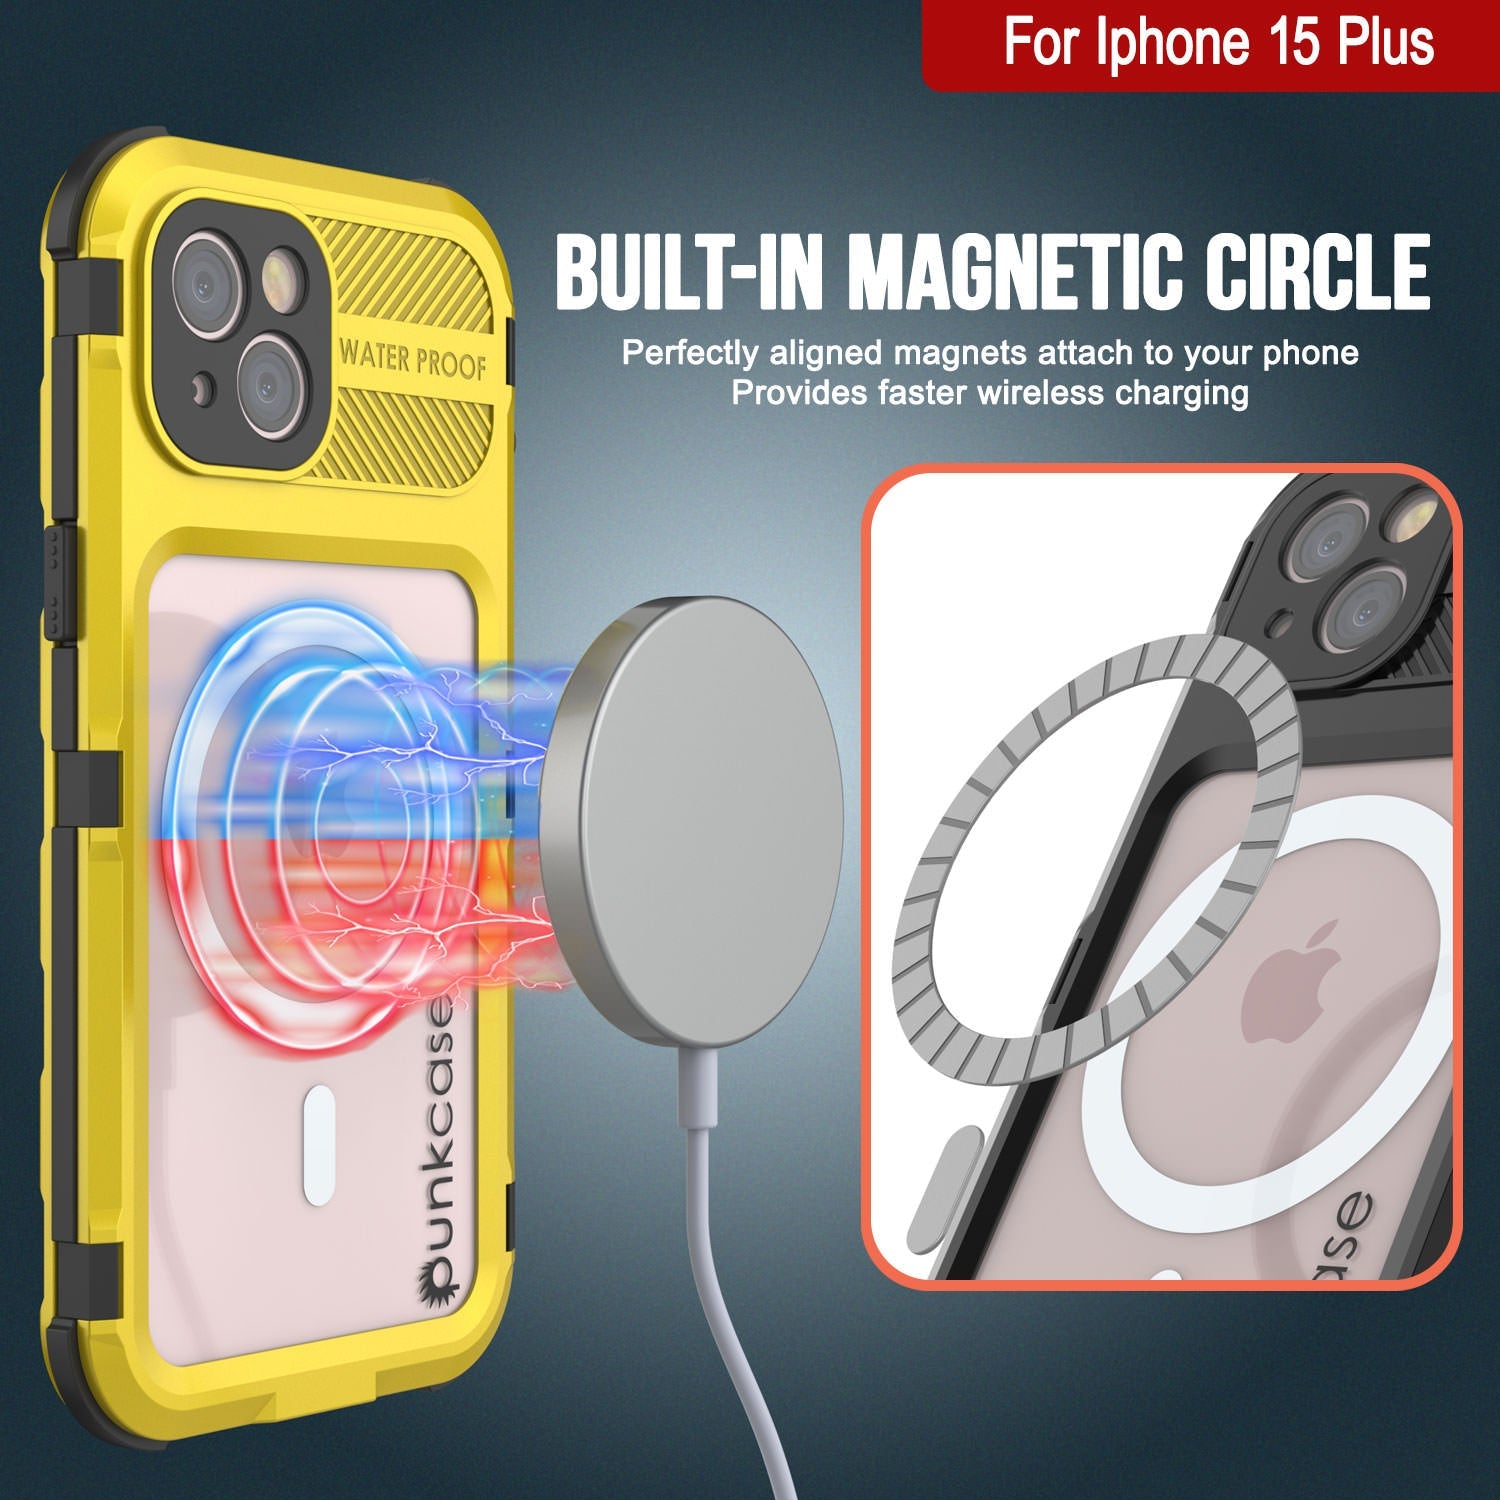 iPhone 15 Plus Metal Extreme 2.0 Series Aluminum Waterproof Case IP68 W/Buillt in Screen Protector [Yellow]